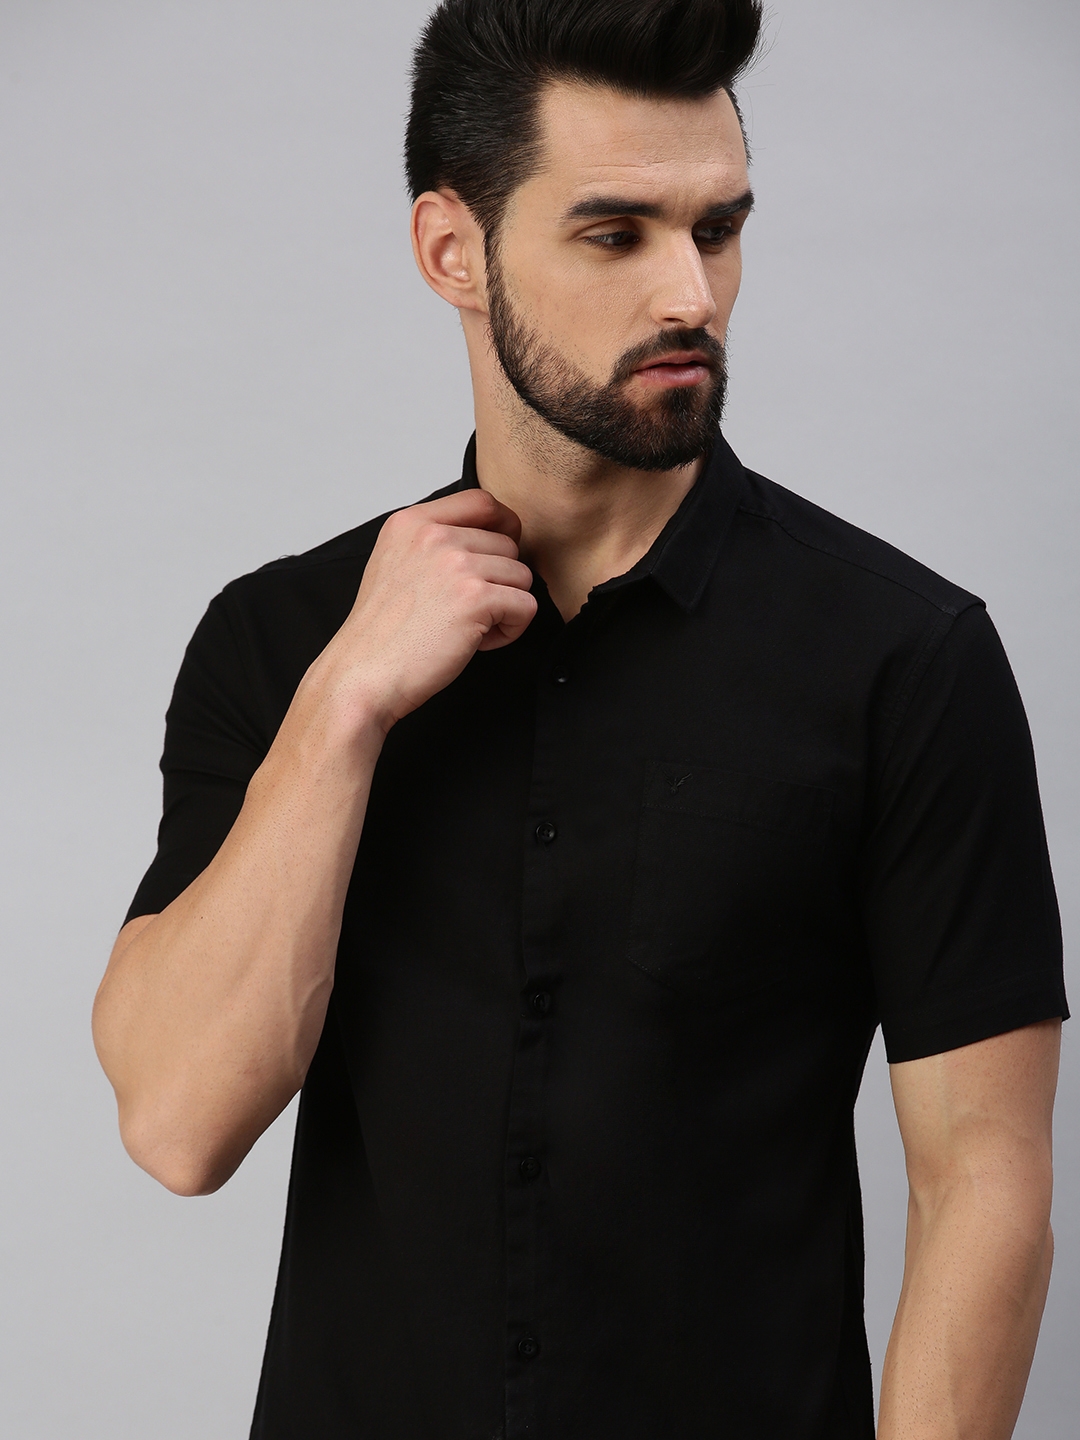 Men's Black Cotton Solid Casual Shirts